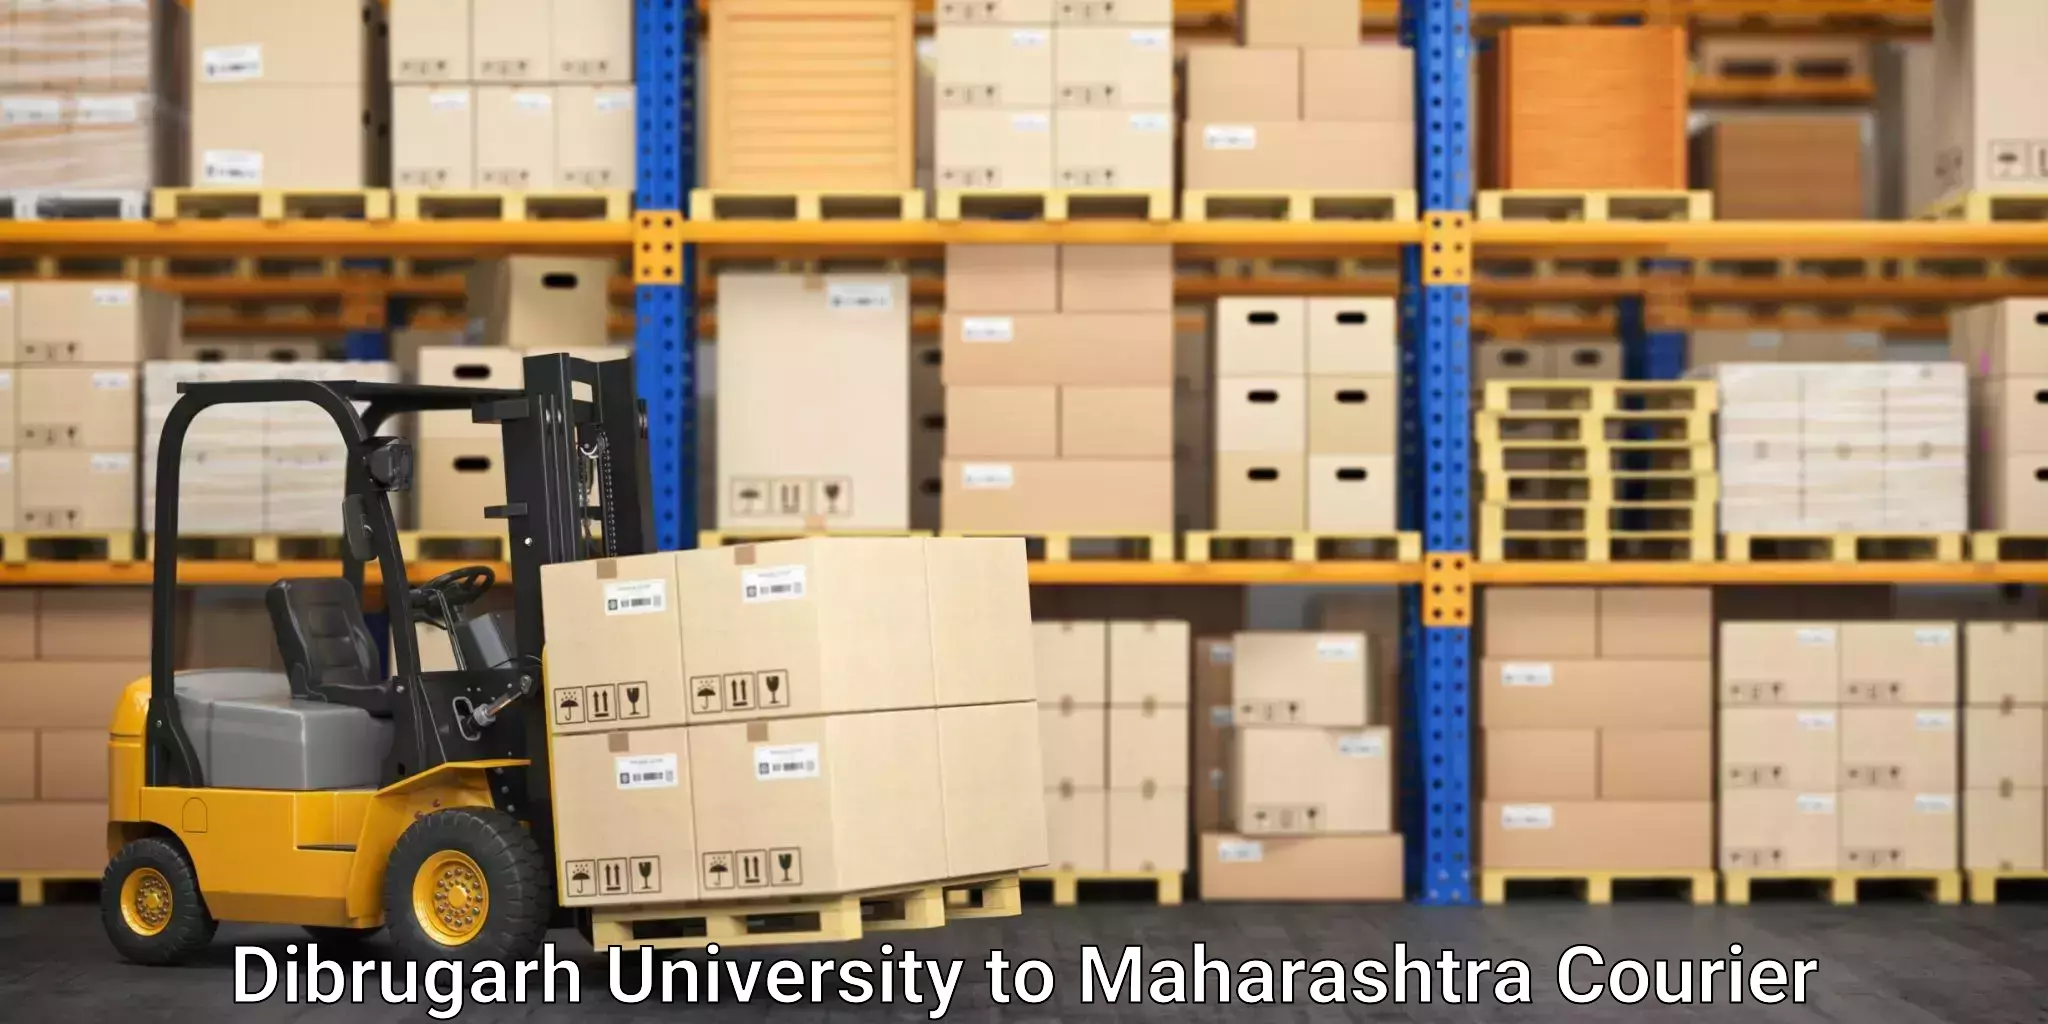 Express shipping Dibrugarh University to Maharashtra